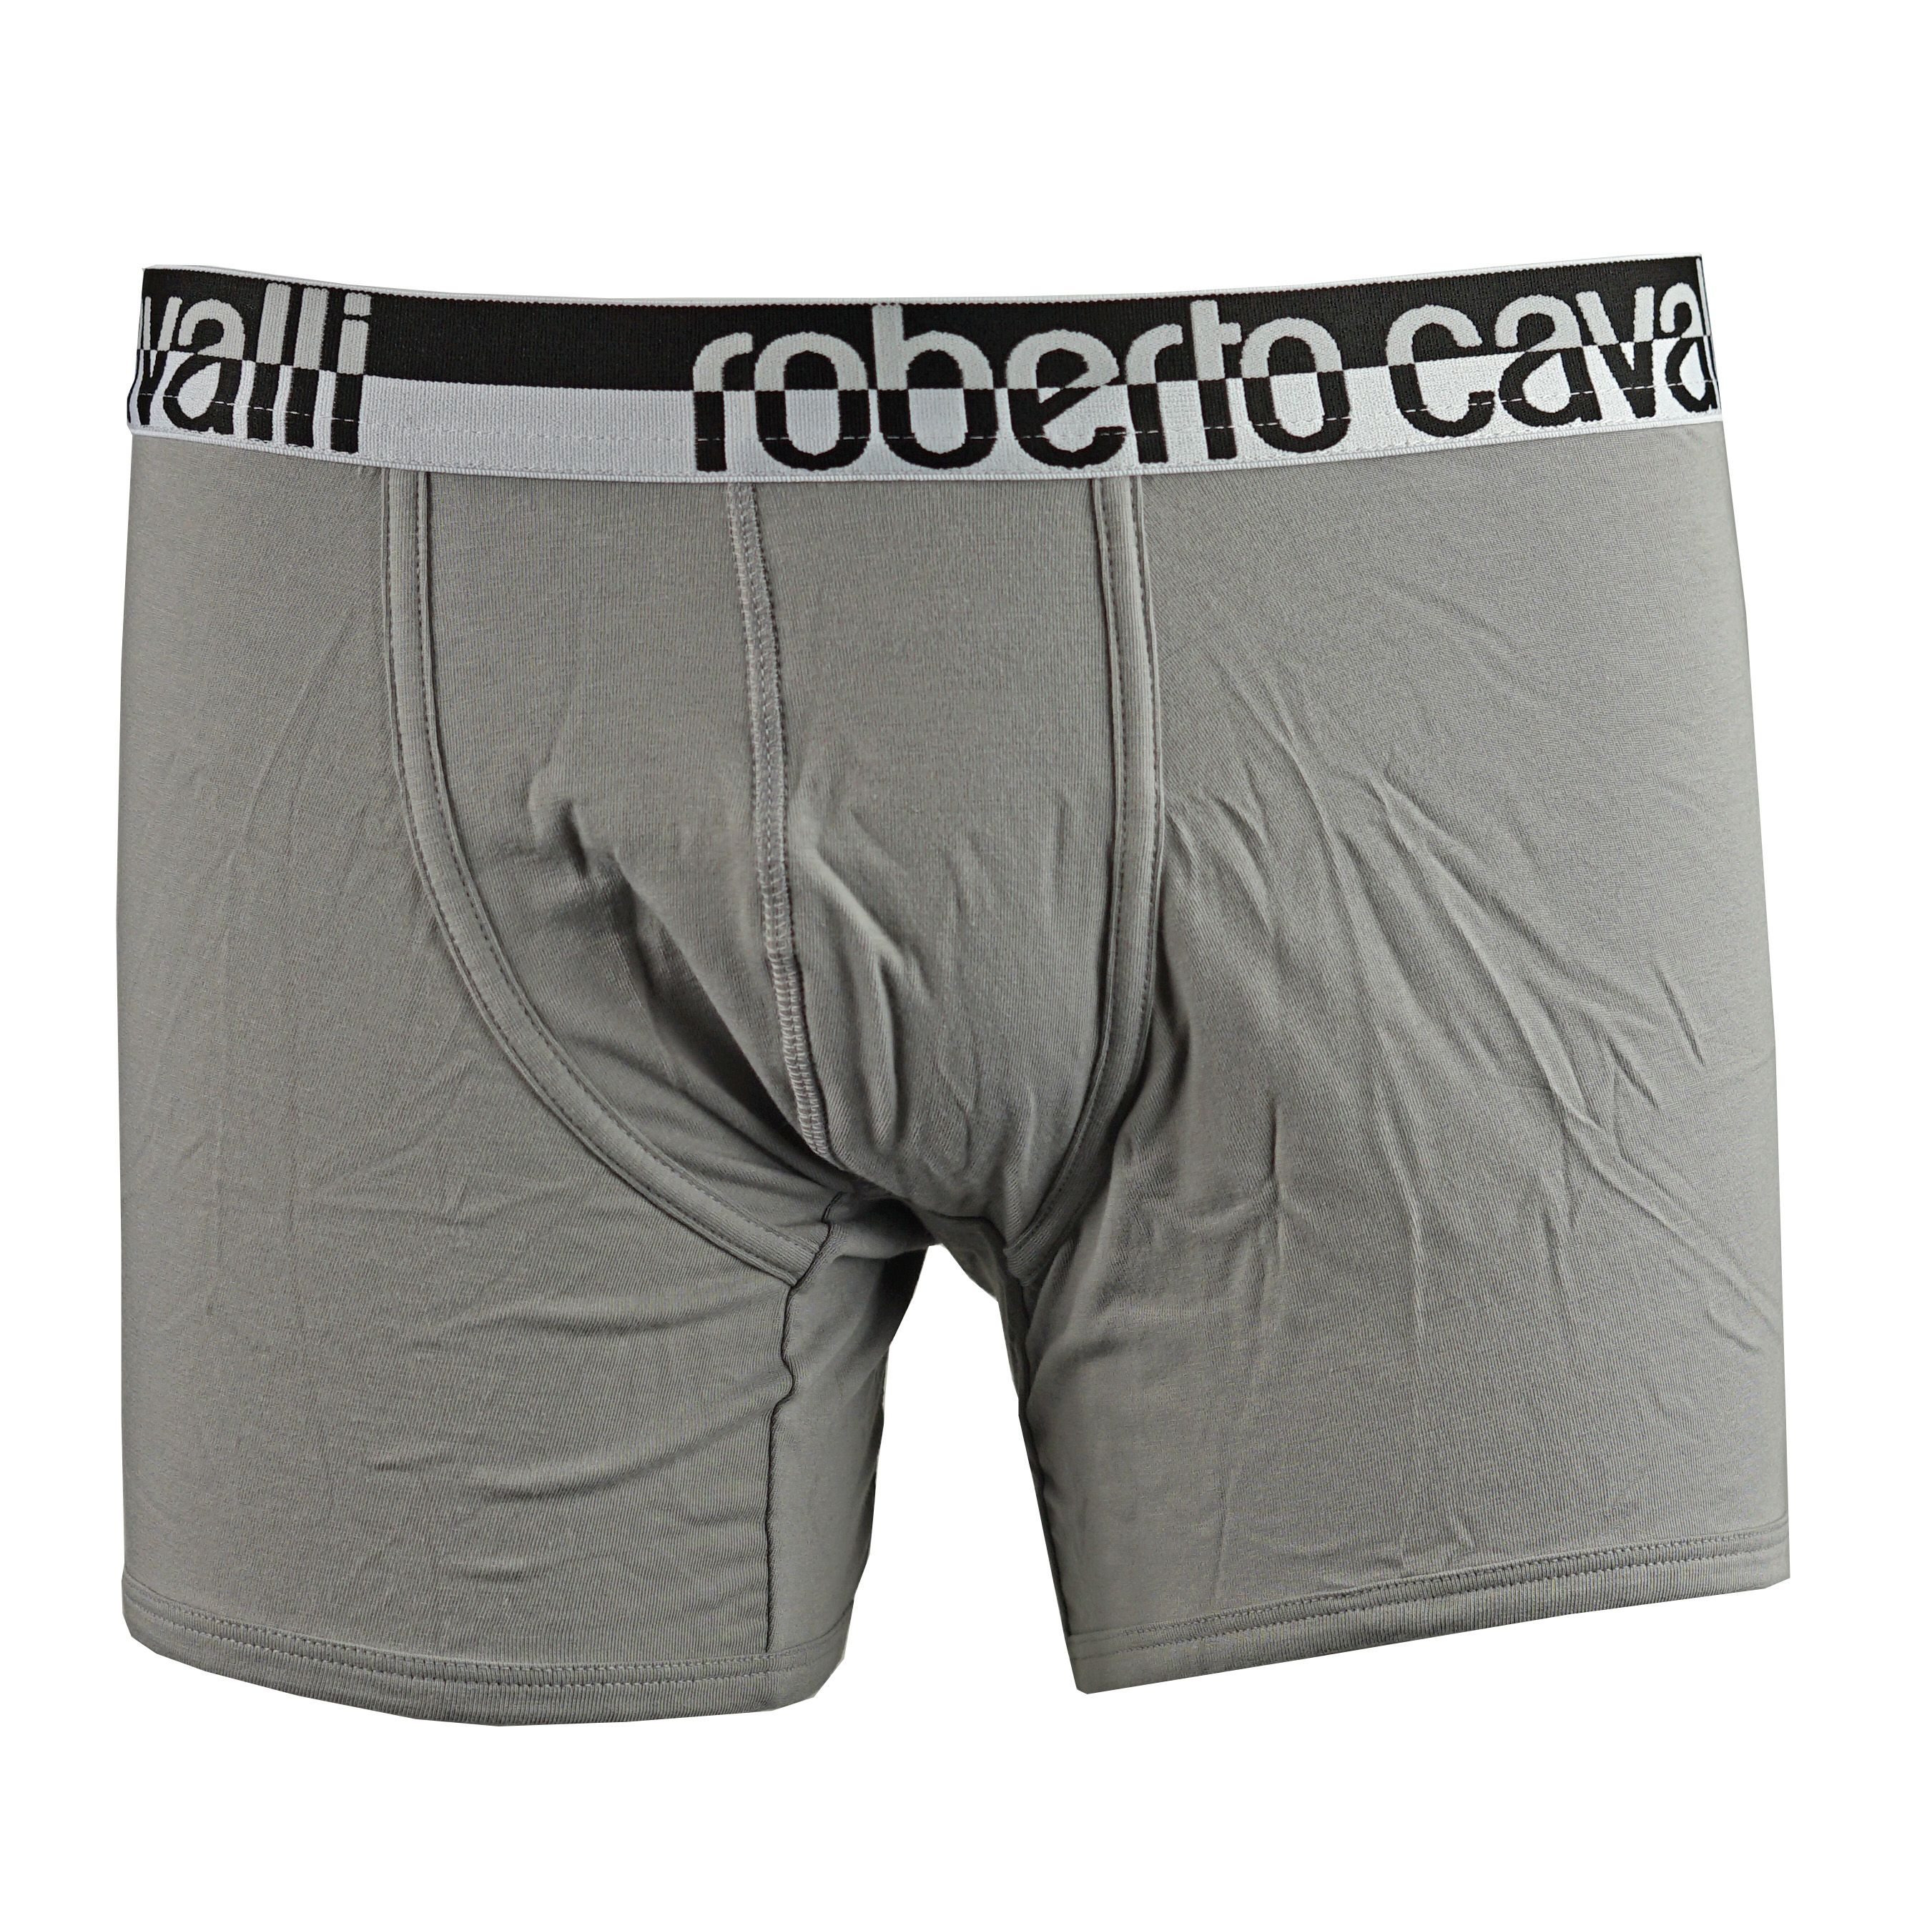 Roberto Cavalli GSK002 JT016 04679 Twin Pack Boxer Shorts